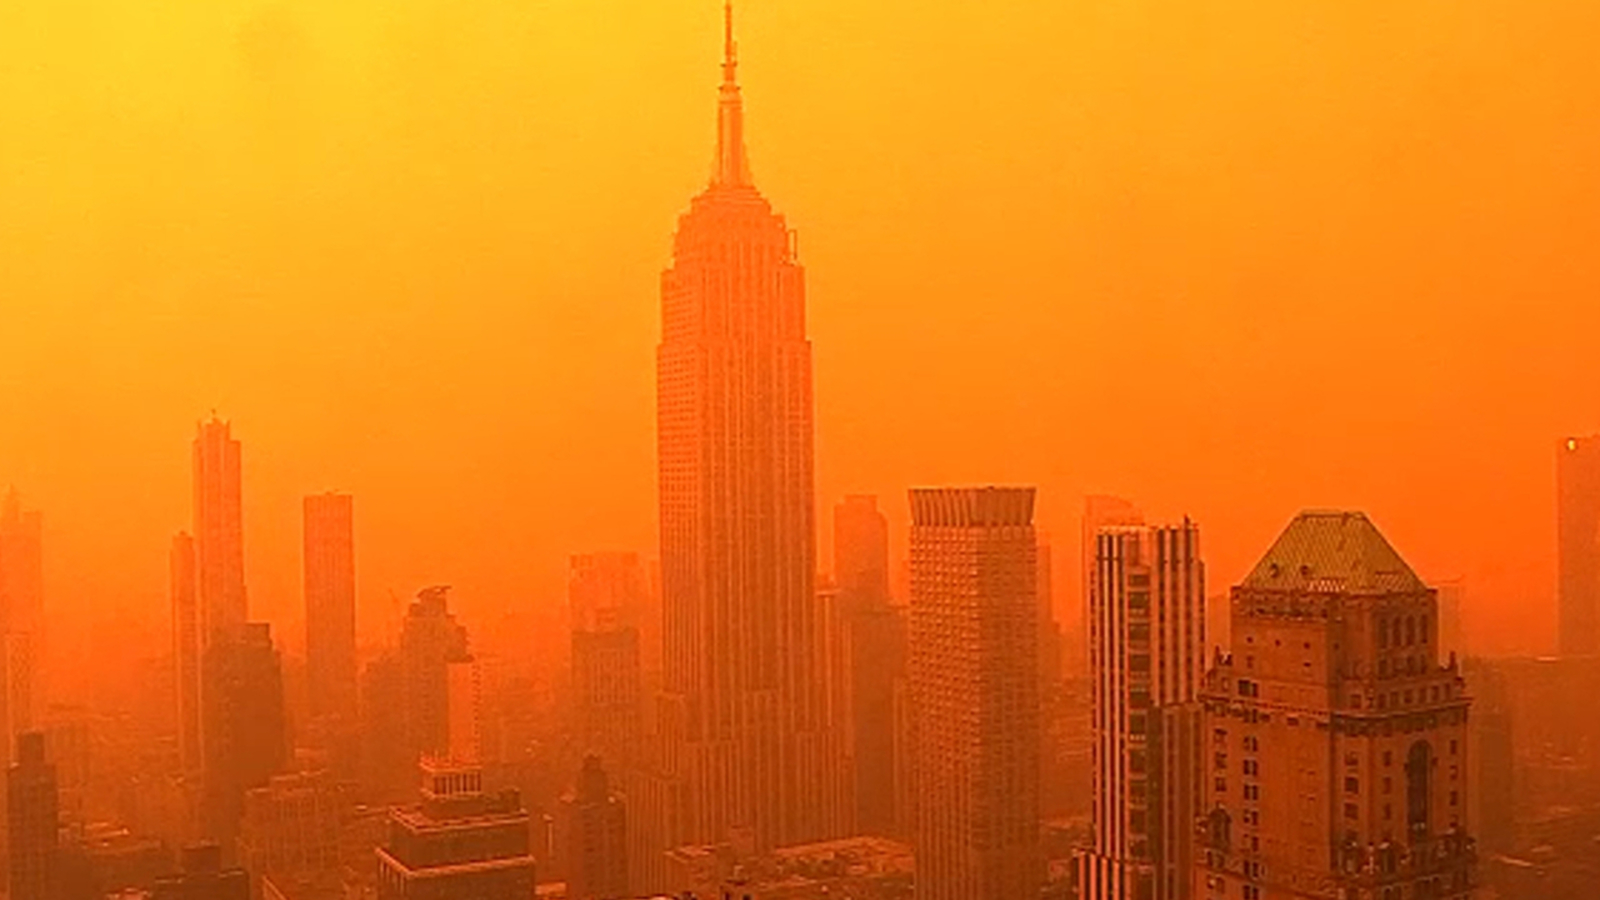 The Orange City New York: Smoke Envelopes The Sky Giving It Shades Of Orange